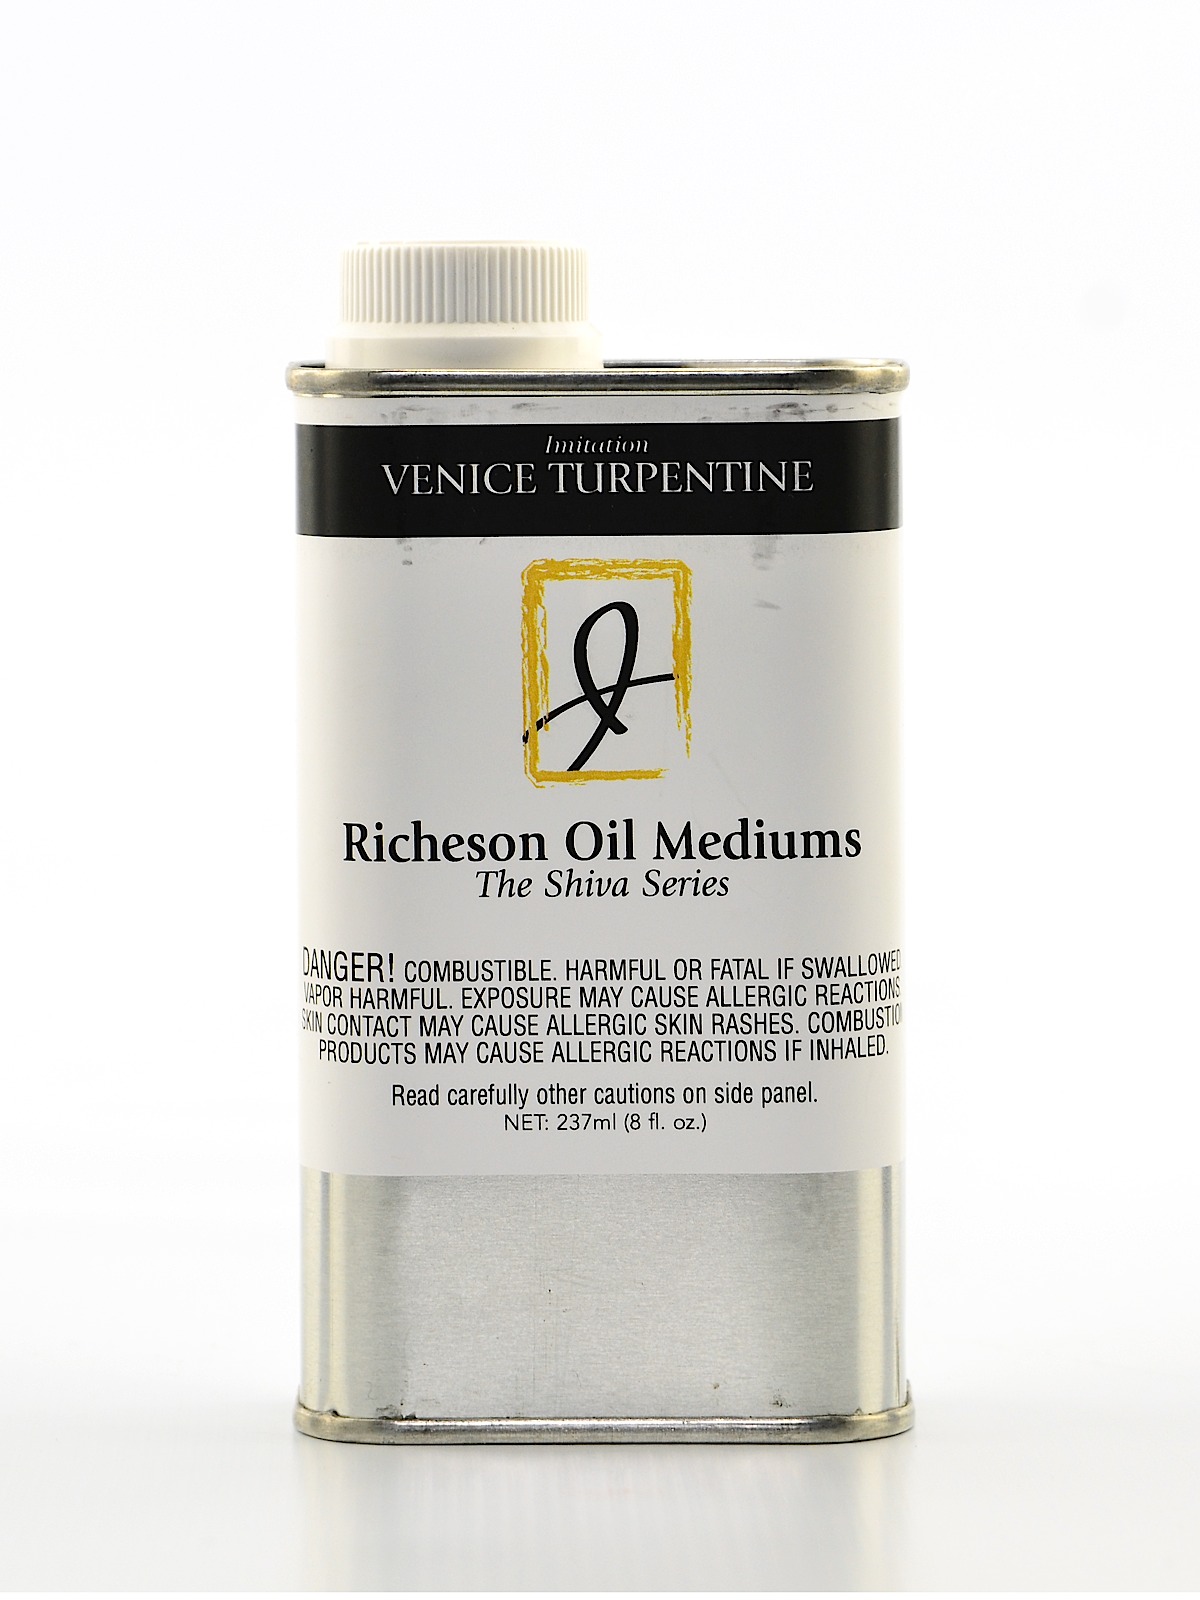 Richeson Oil Mediums Venice Turpentine 8 Oz.